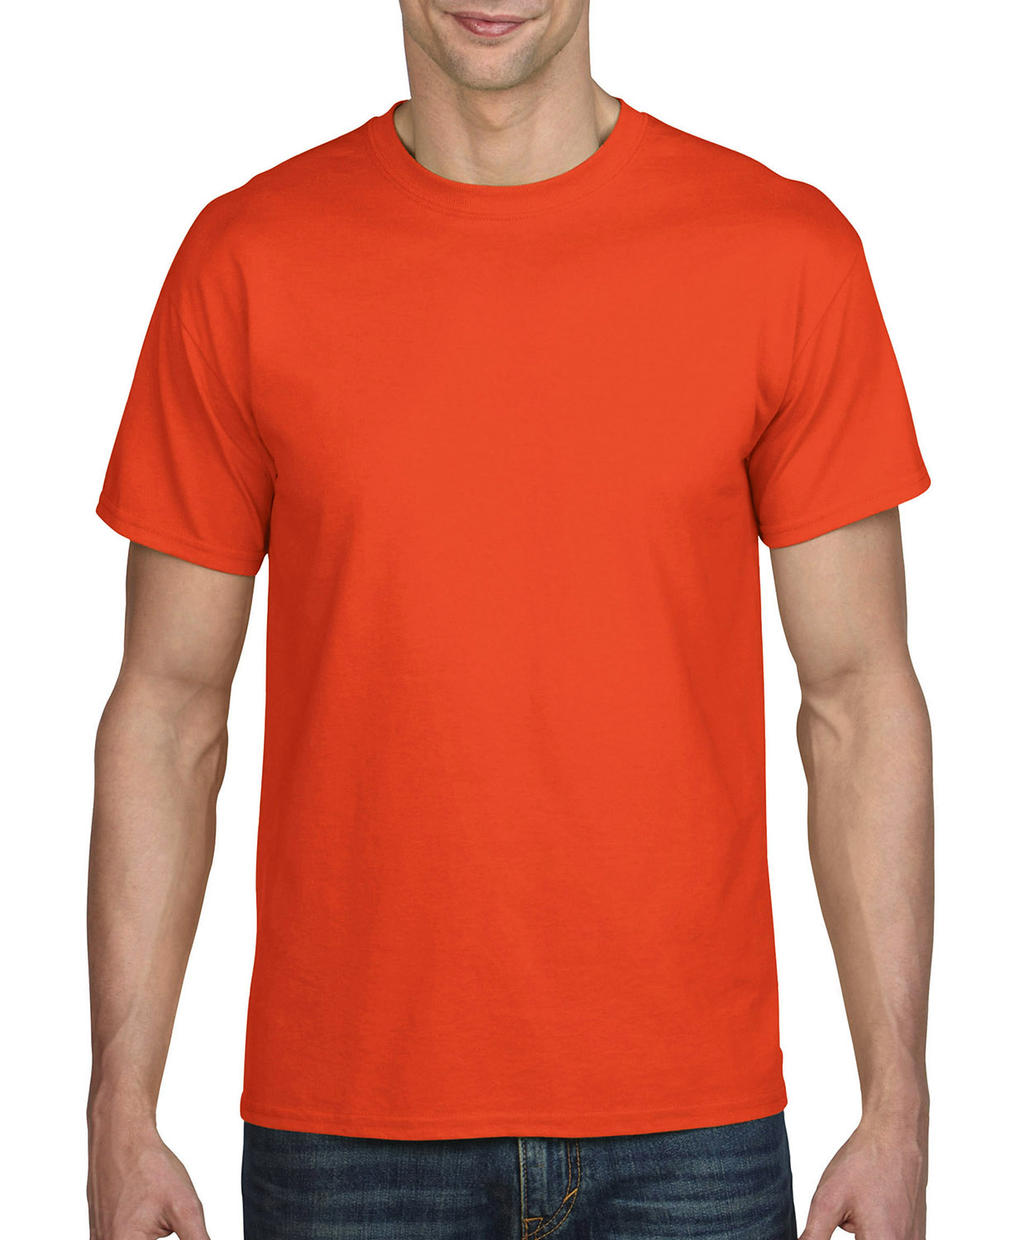  DryBlend? Adult T-Shirt in Farbe Orange